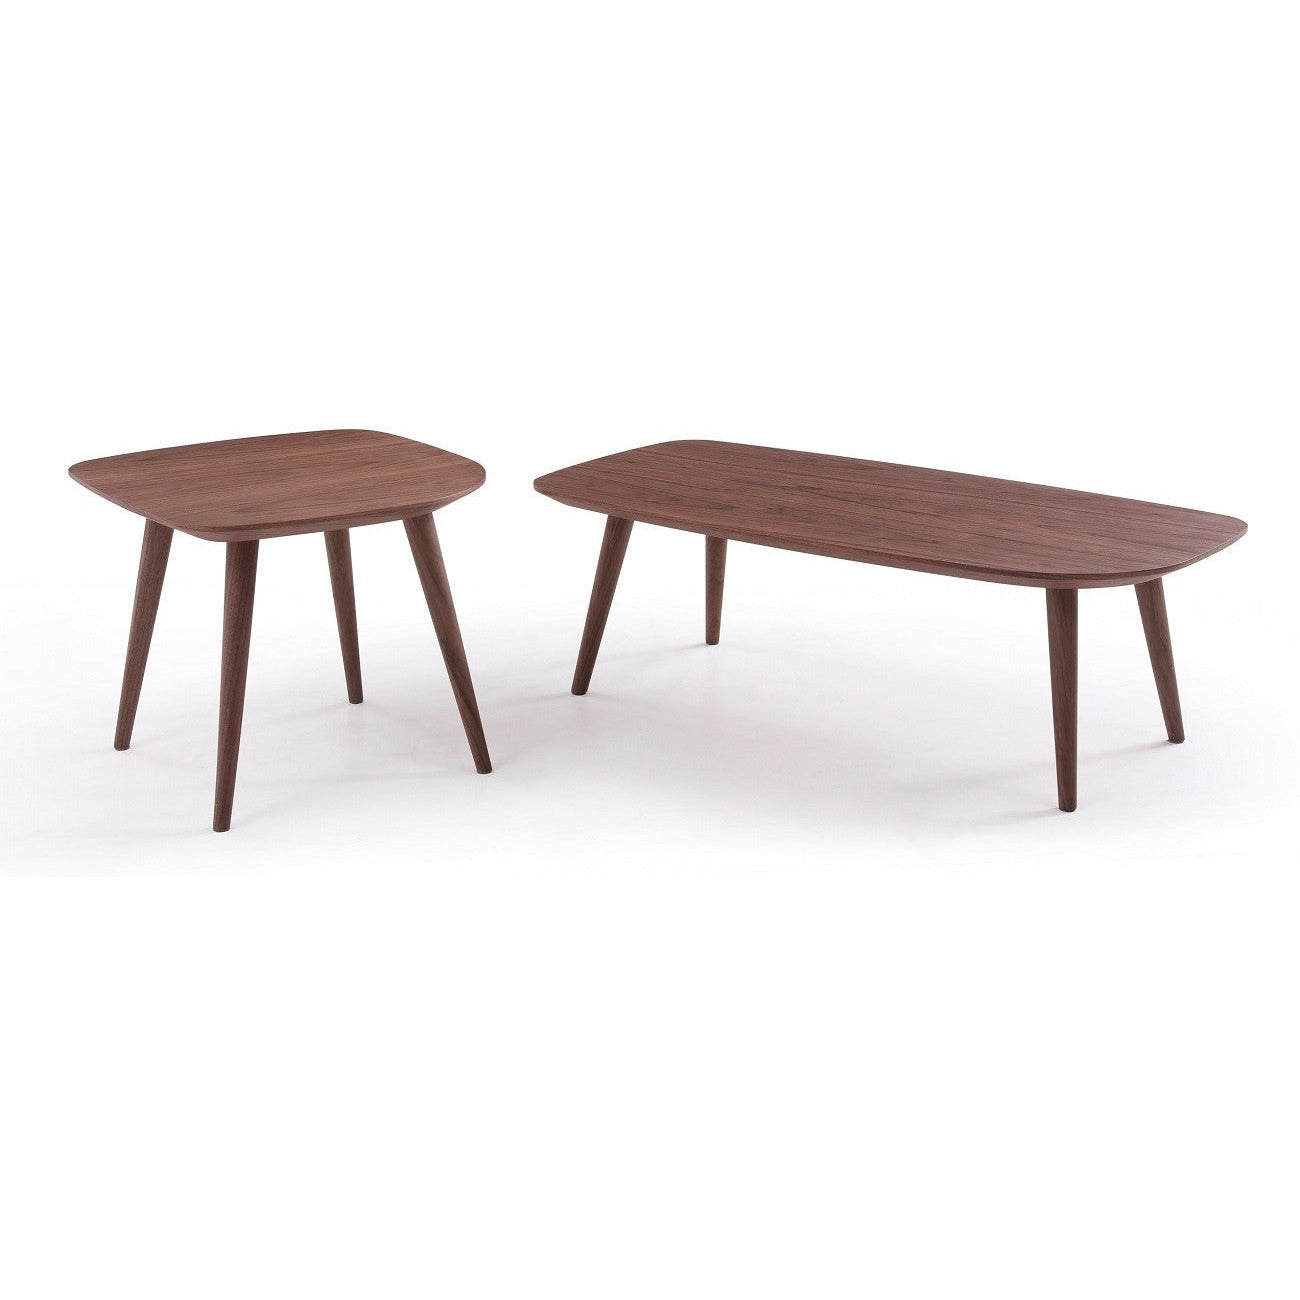 J&M Furniture Downtown Coffee Table (SKU17978-CT)